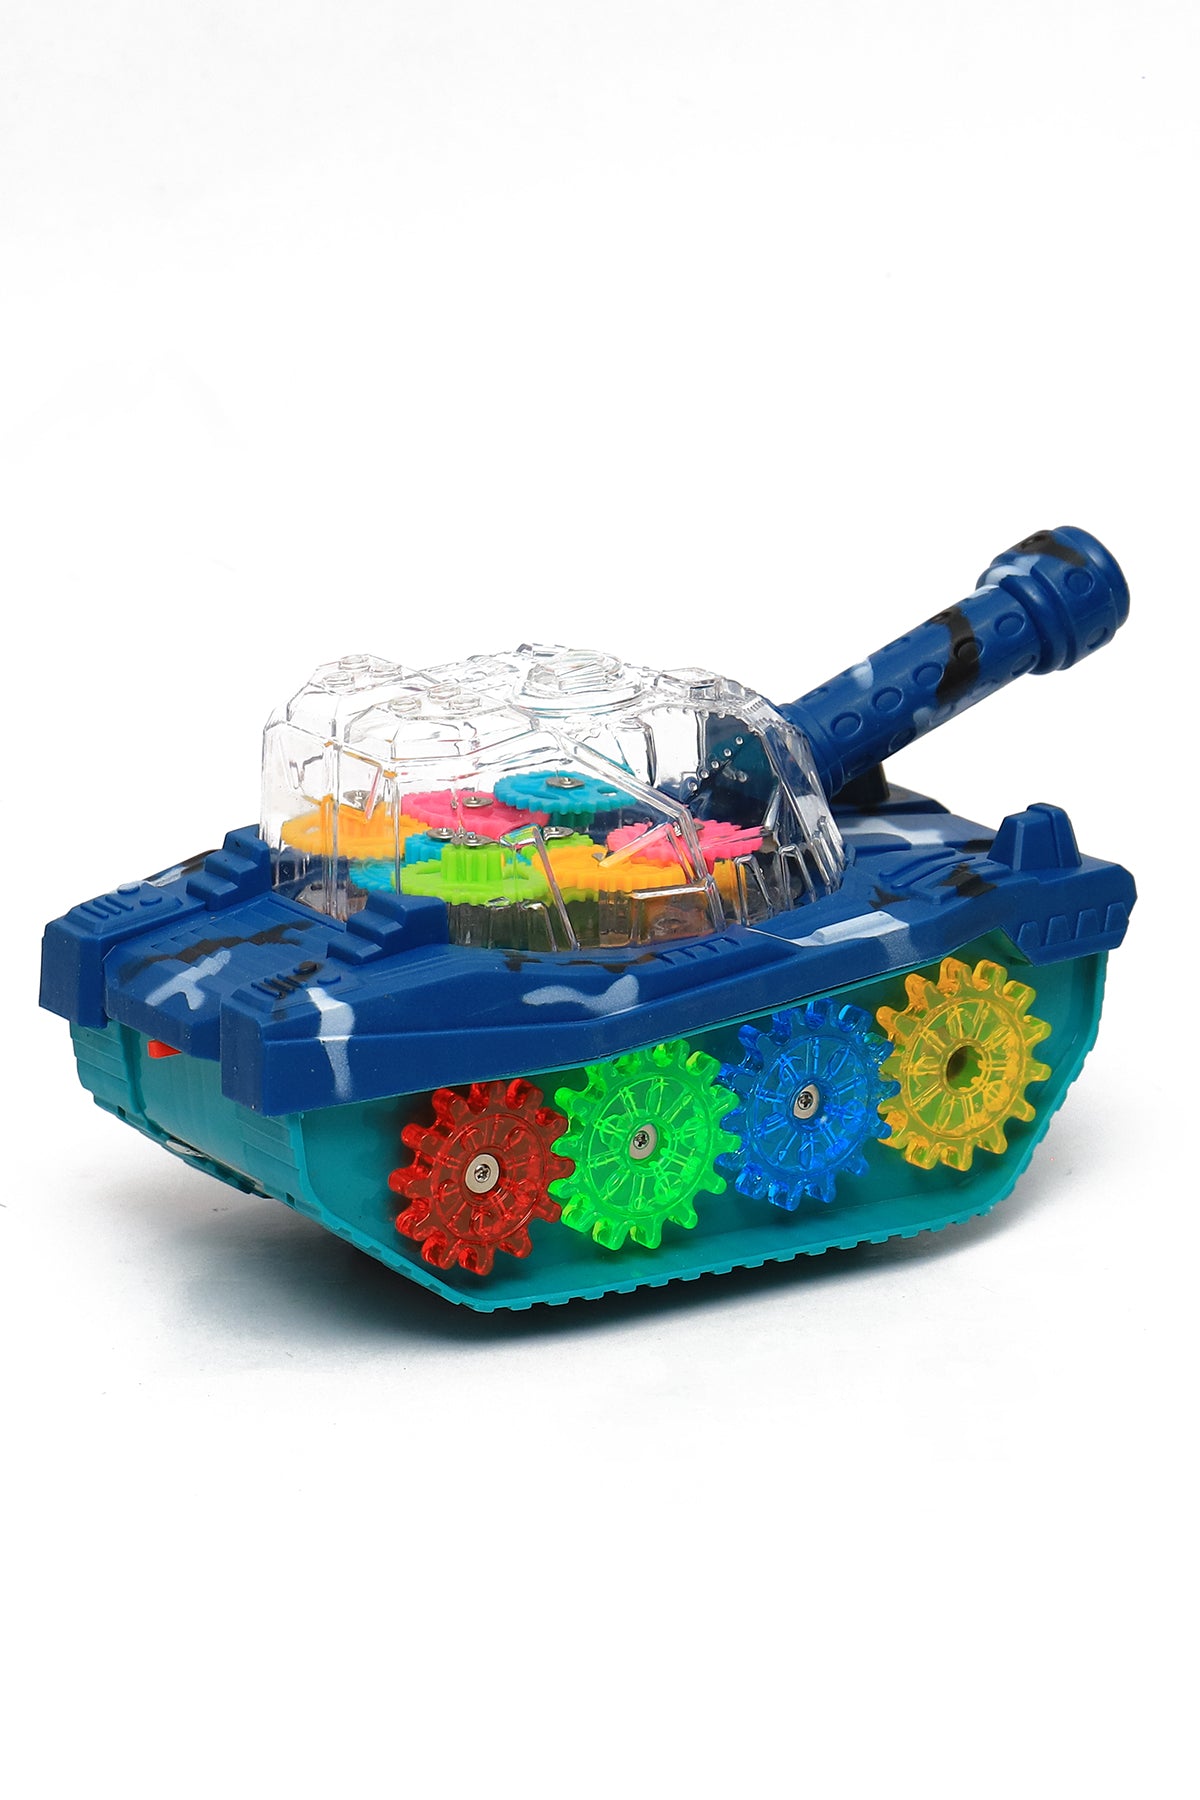 Army Tank Toy